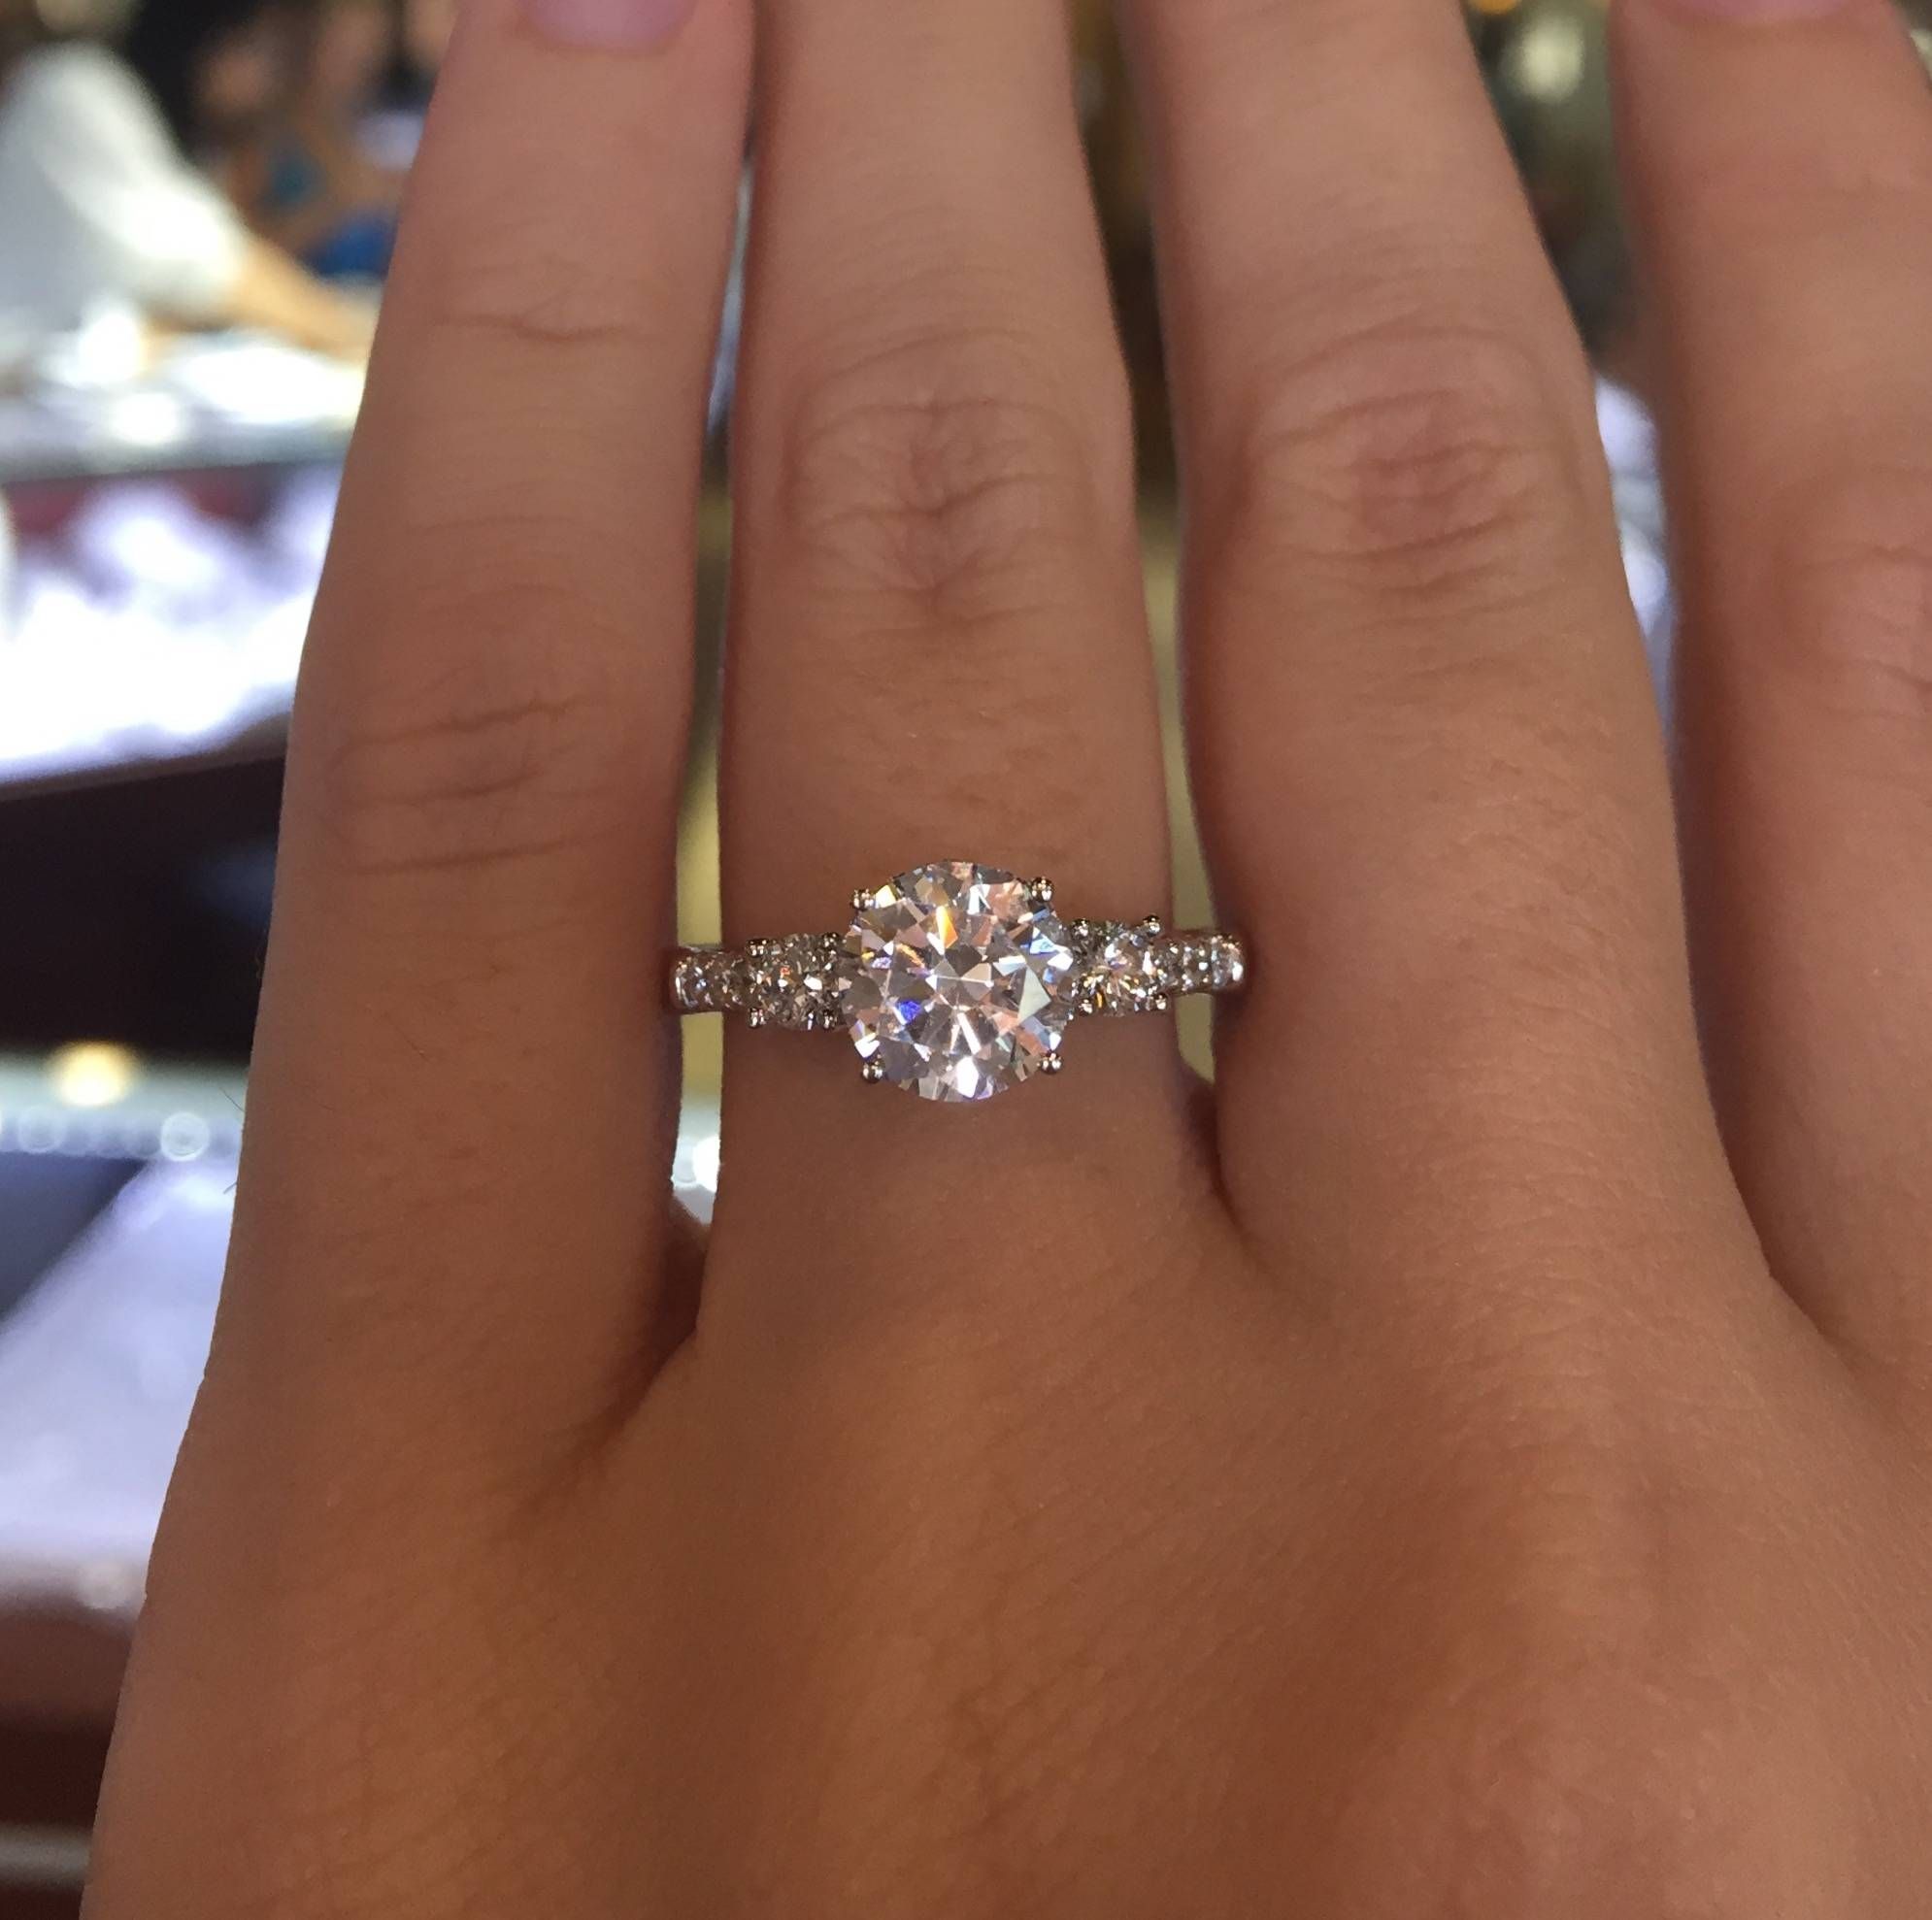 Engagement Rings : Top 10 Engagement Ring Designs Beautiful Regarding Size 4 Diamond Engagement Rings (View 7 of 15)